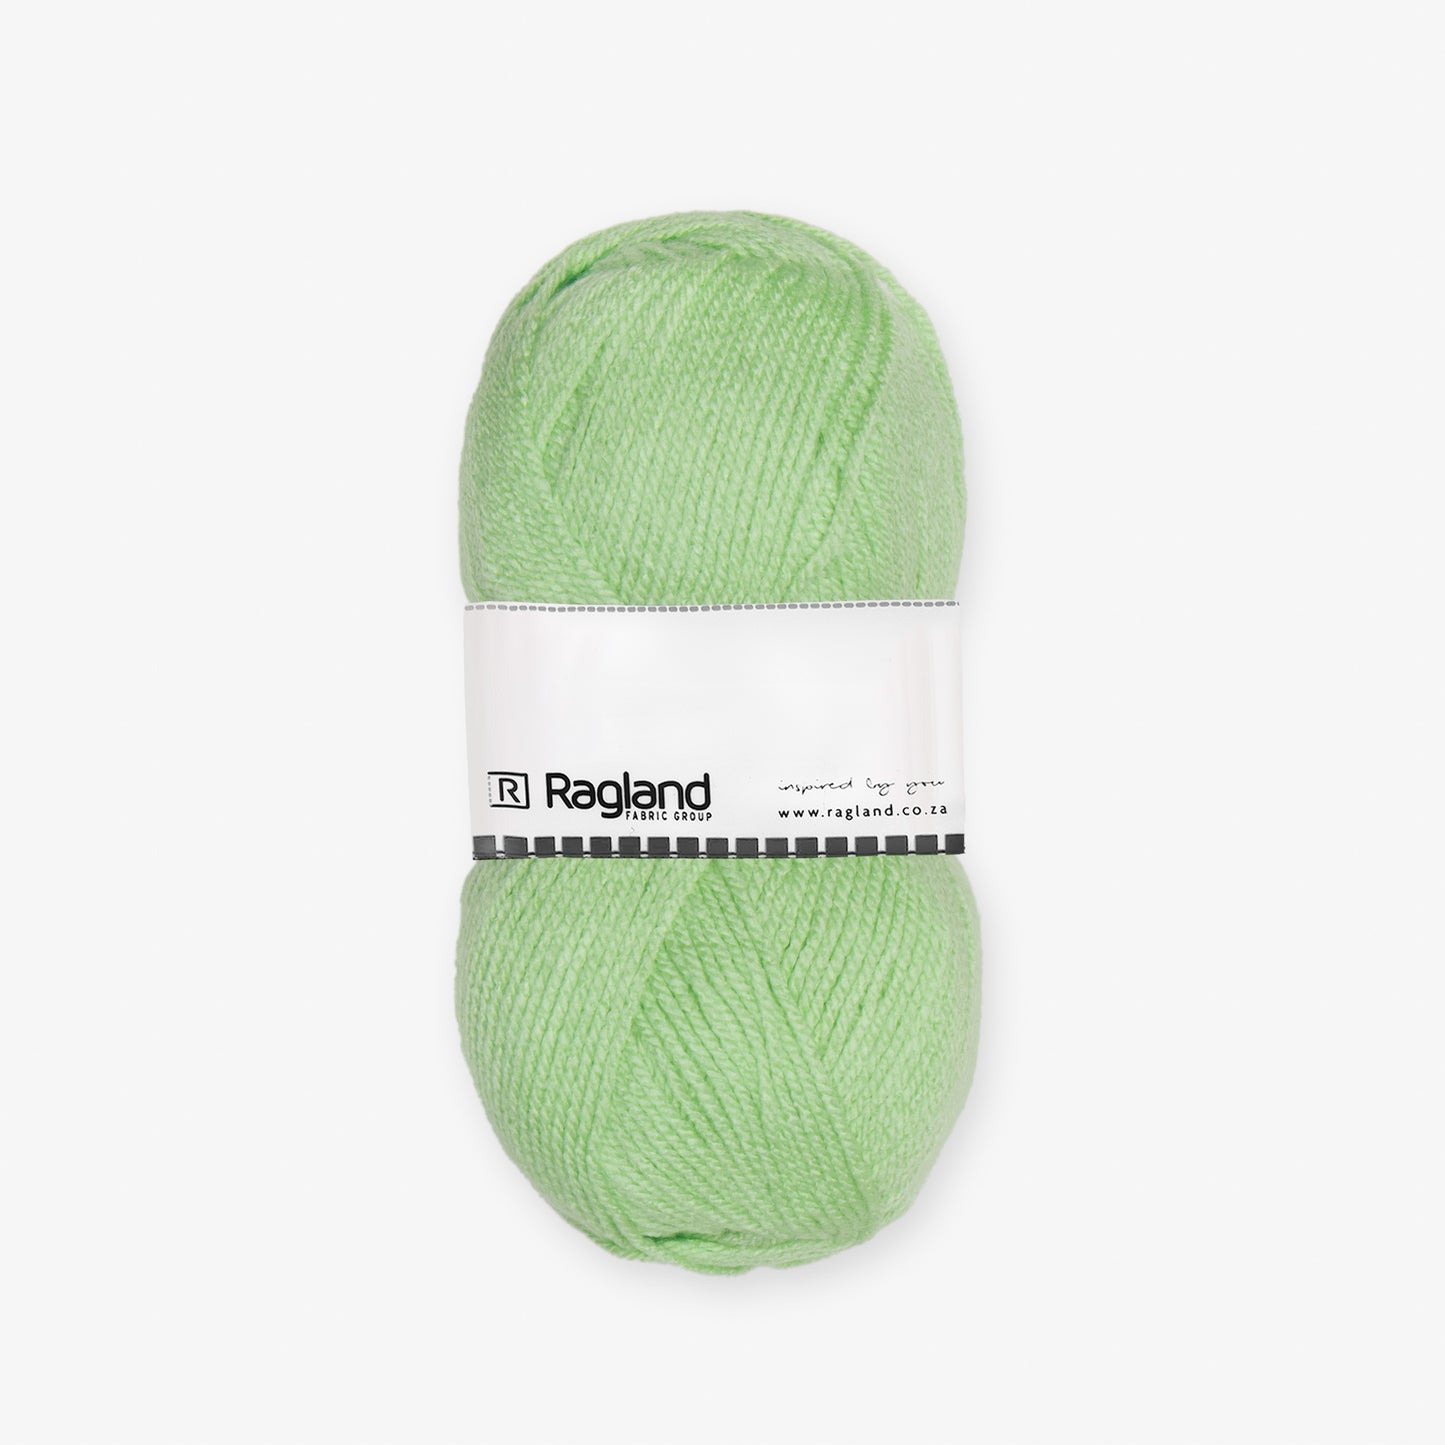 Lollipop Dbl Knit Mint Green #7